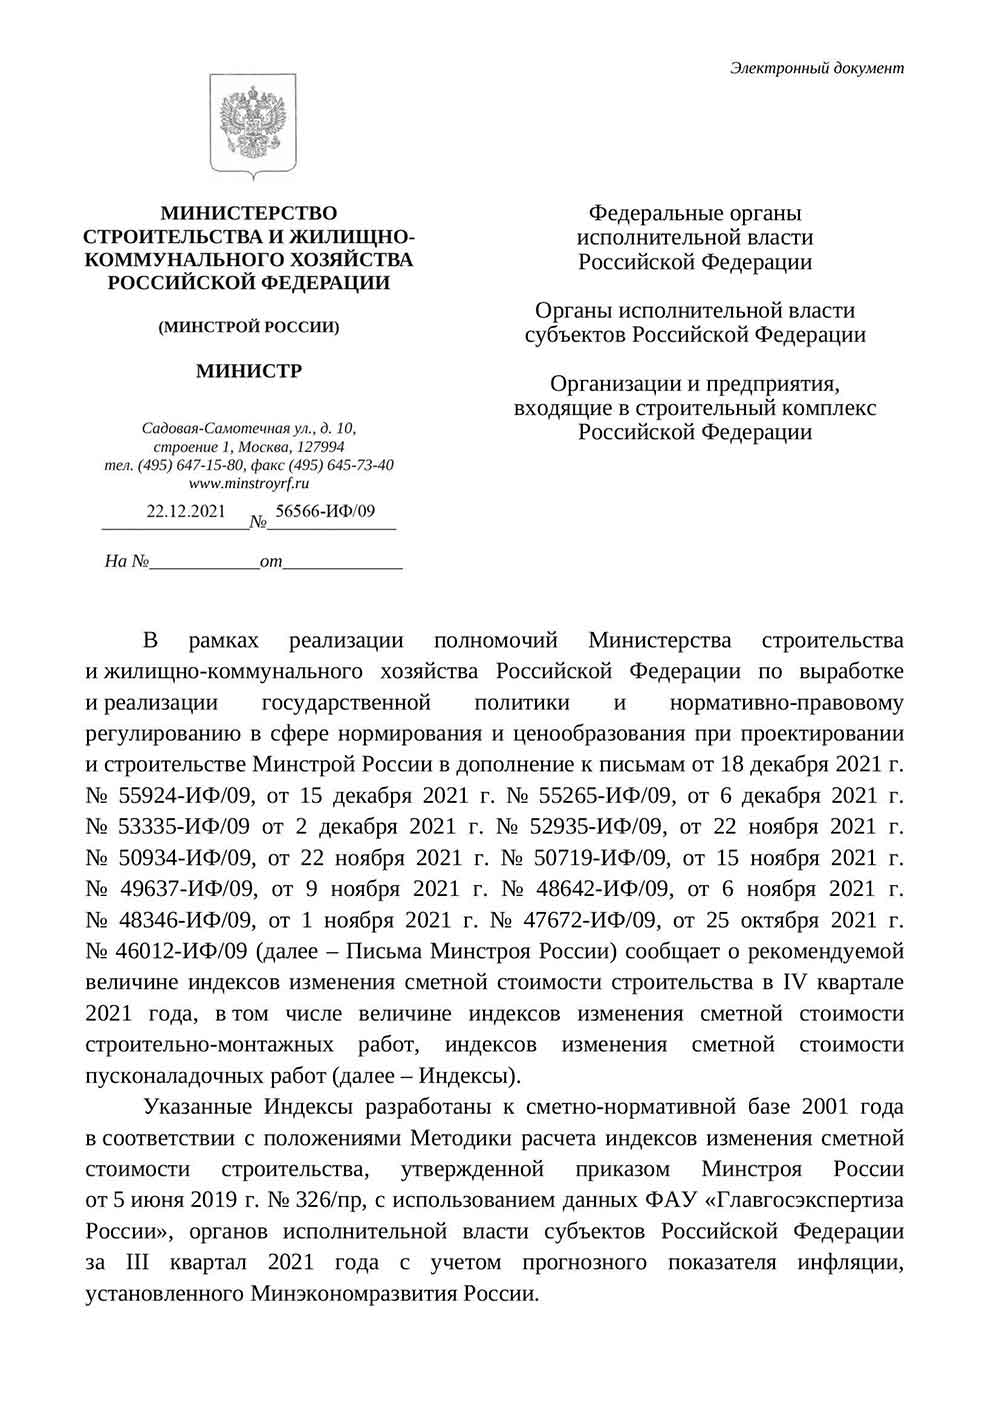 Письмо Минстроя РФ №56566-ИФ/09 от 22.12.2021 г.